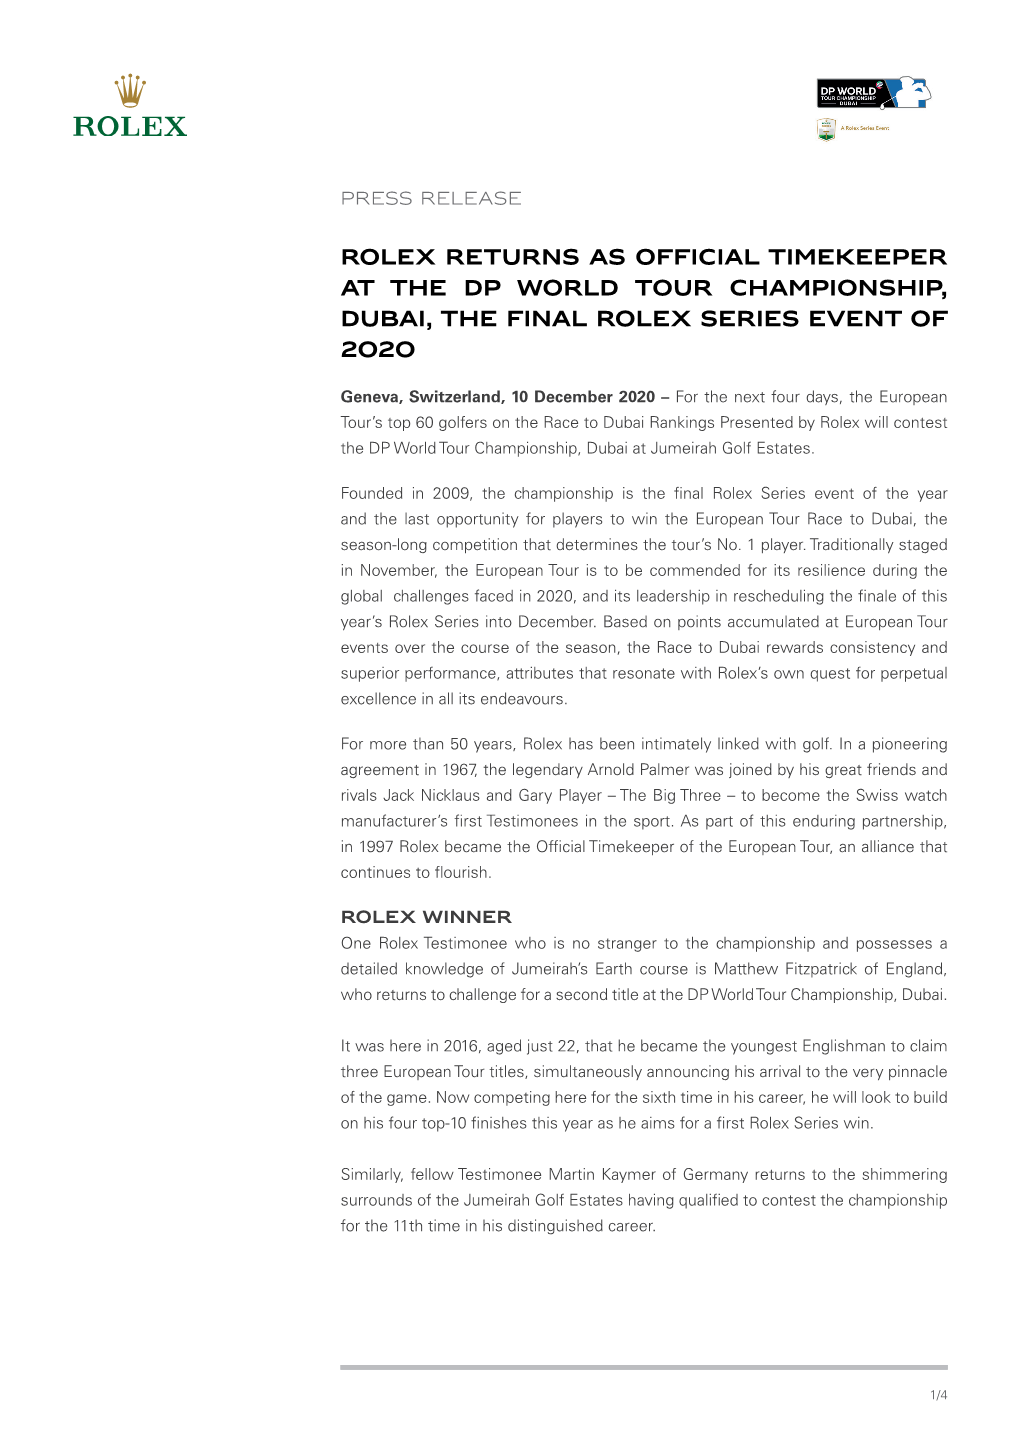 Rolex Returns As Official Timekeeper at the Dp World Tour Championship, Dubai, the Final Rolex Series Event of 2020